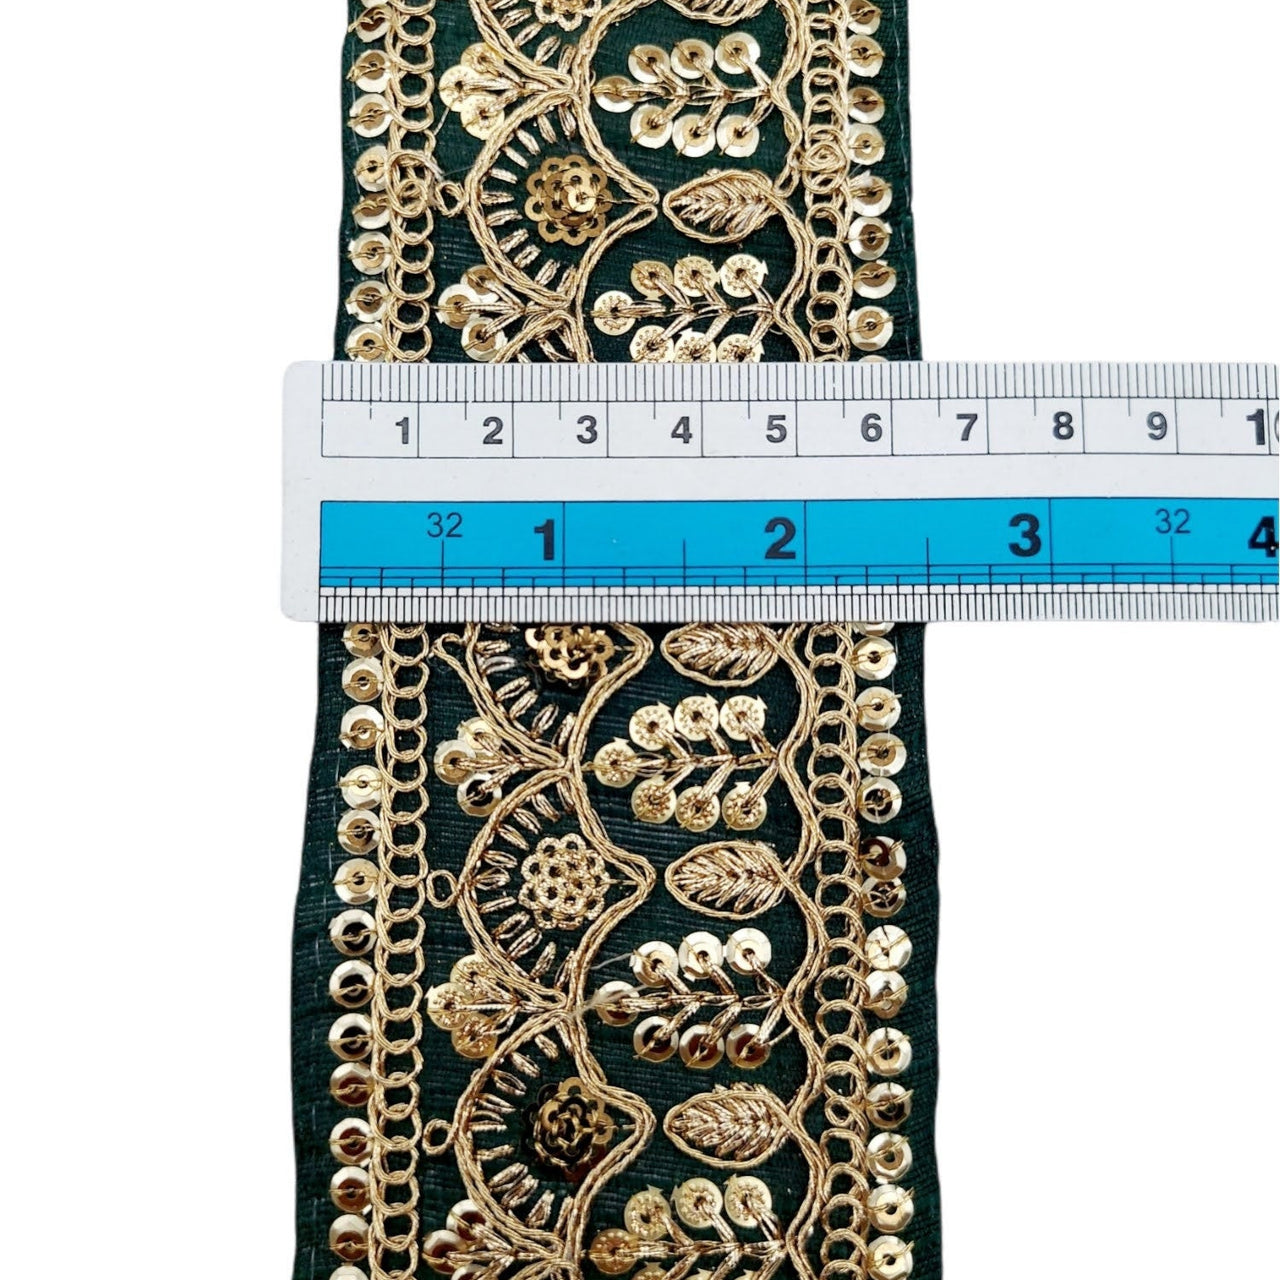 Dark Green Gold Embroidered Lace Trim Sequins Trim 9 Yard Decorative Sari Border Costume Ribbon Crafting Sewing Tape